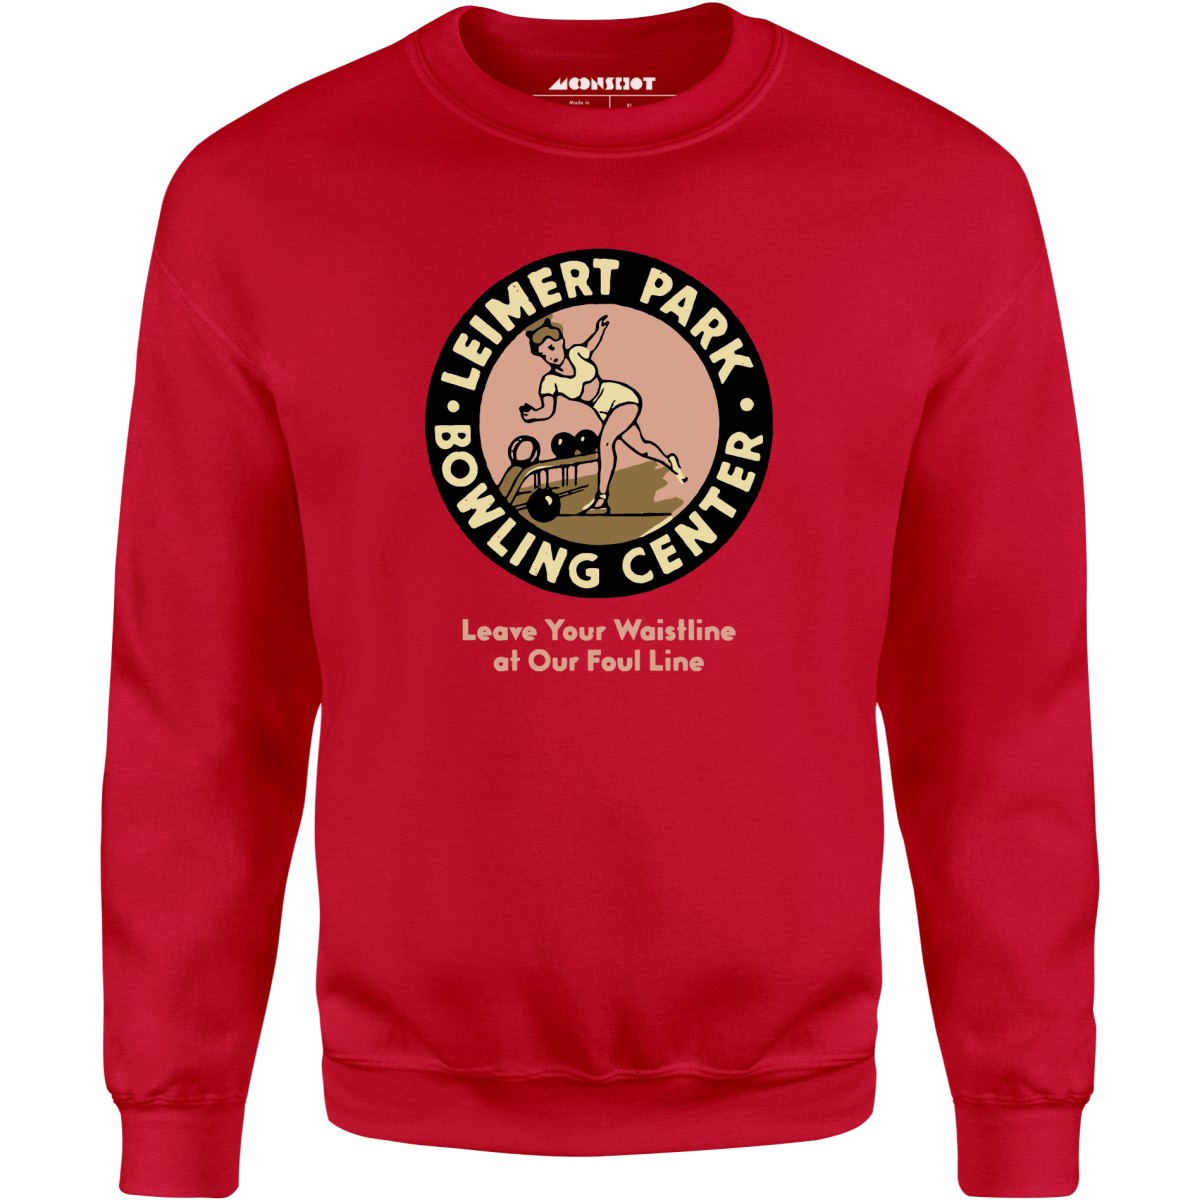 Leimert Park Bowling Center - Los Angeles, CA - Vintage Bowling Alley - Unisex Sweatshirt